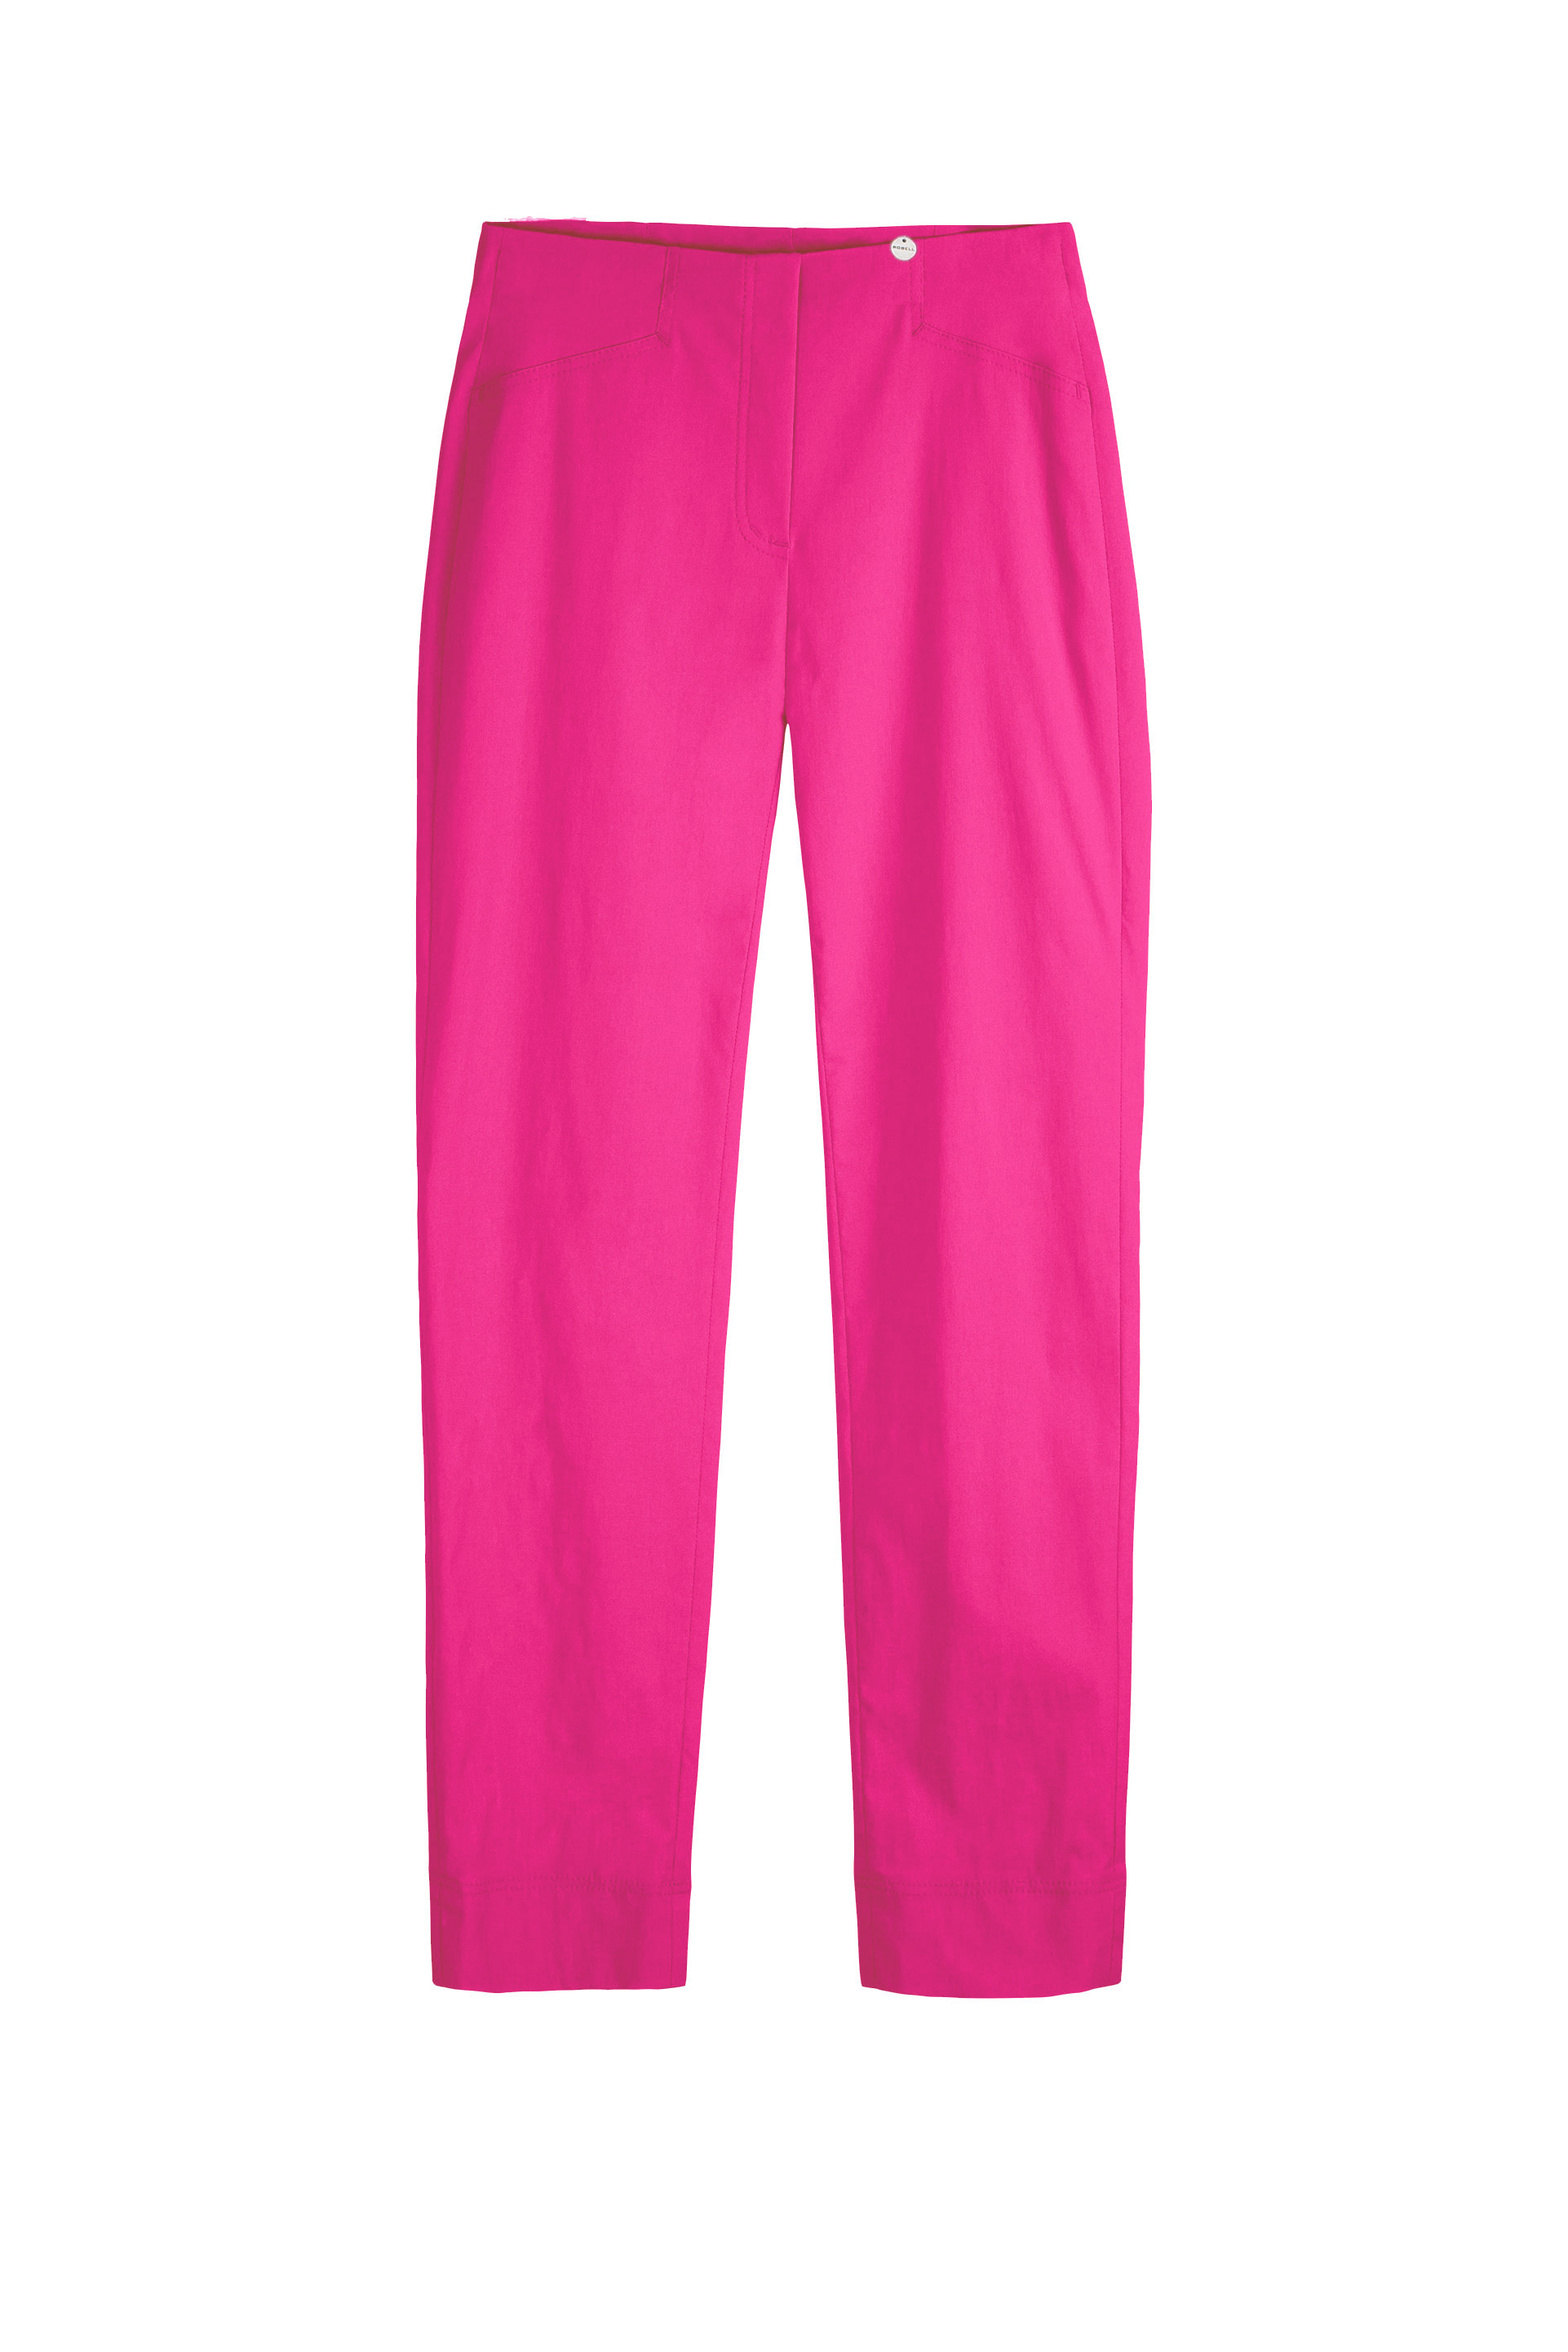 68157_rosa_78_trousers_hot_pink.jpg